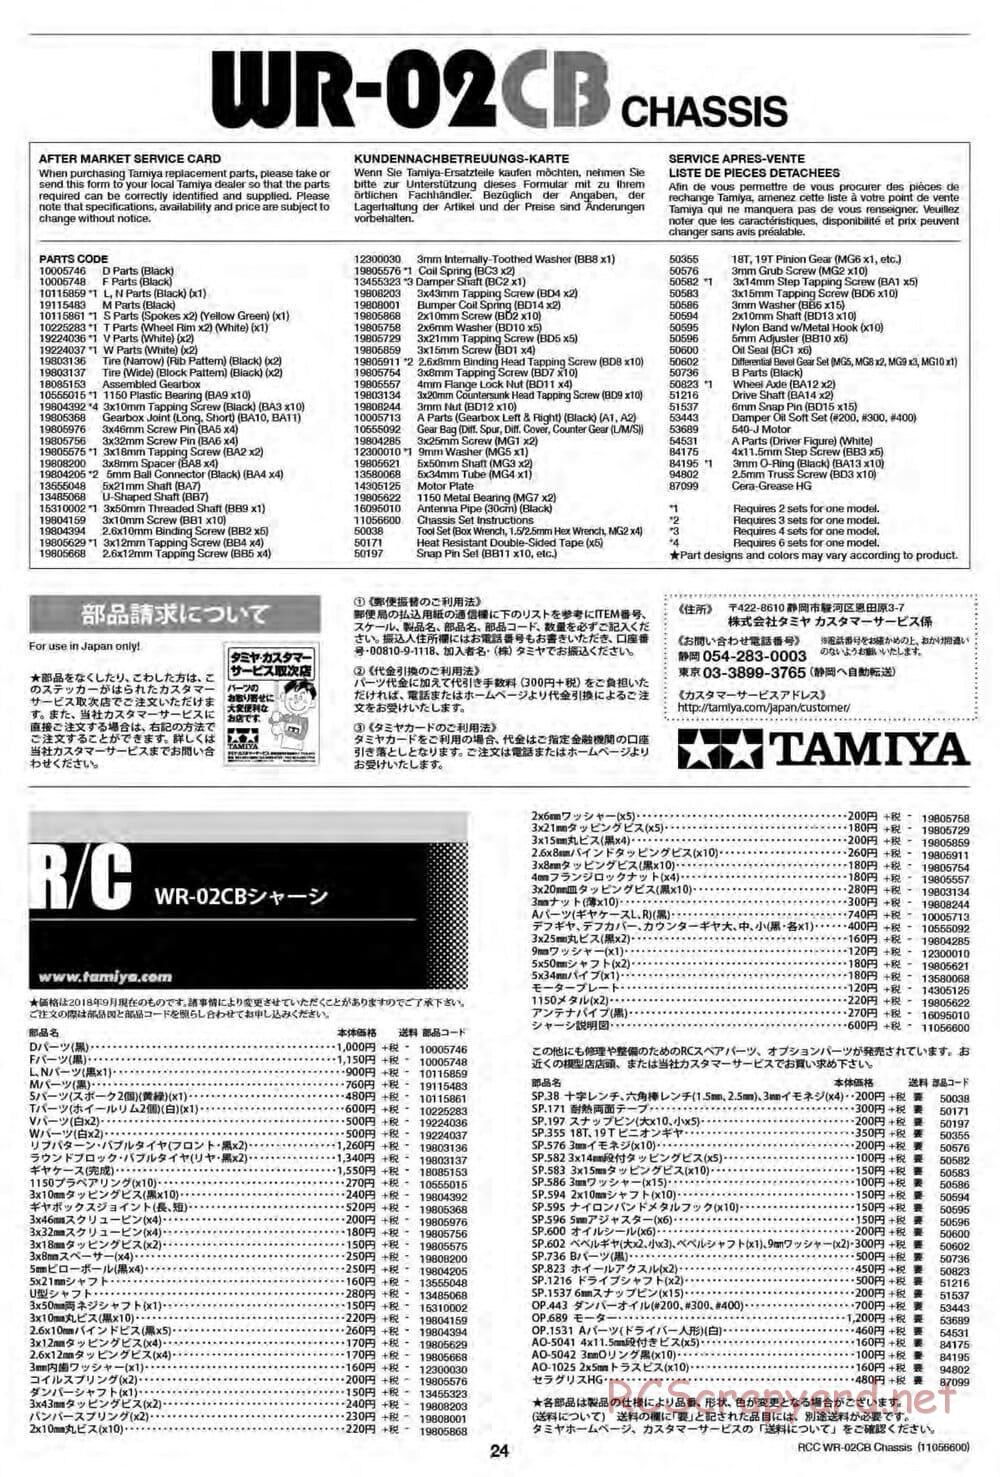 Tamiya - WR-02CB Chassis - Manual - Page 24